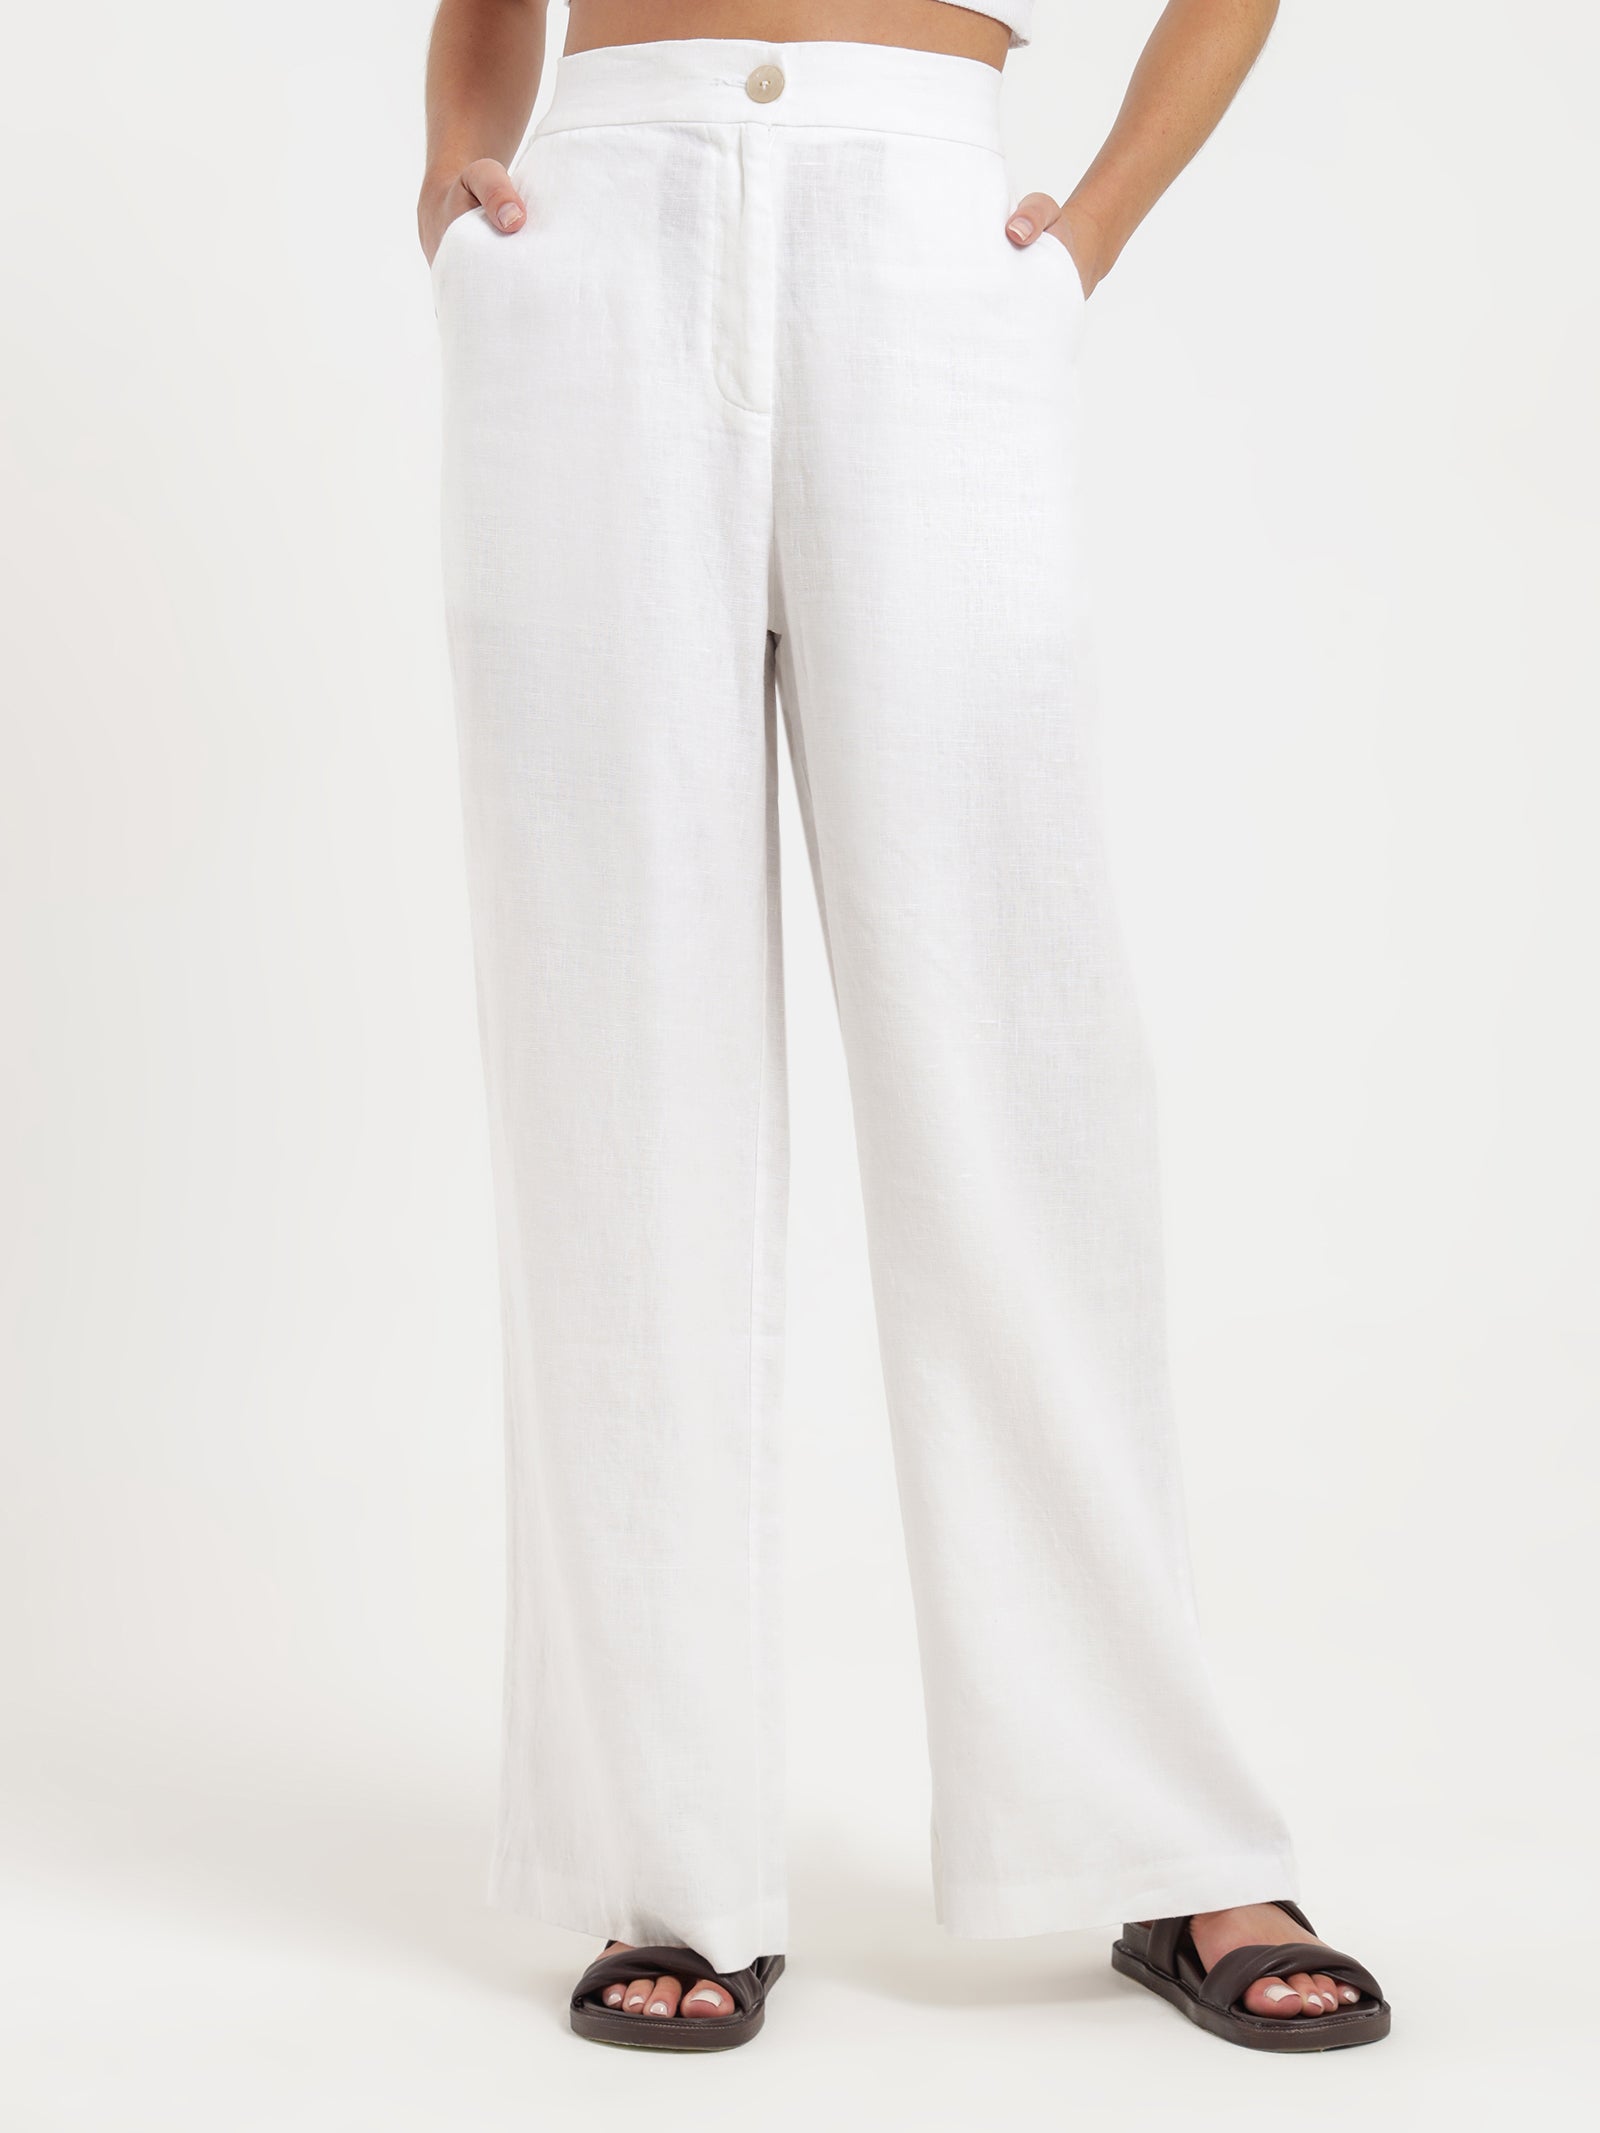 Sima Linen Pants in White - Glue Store